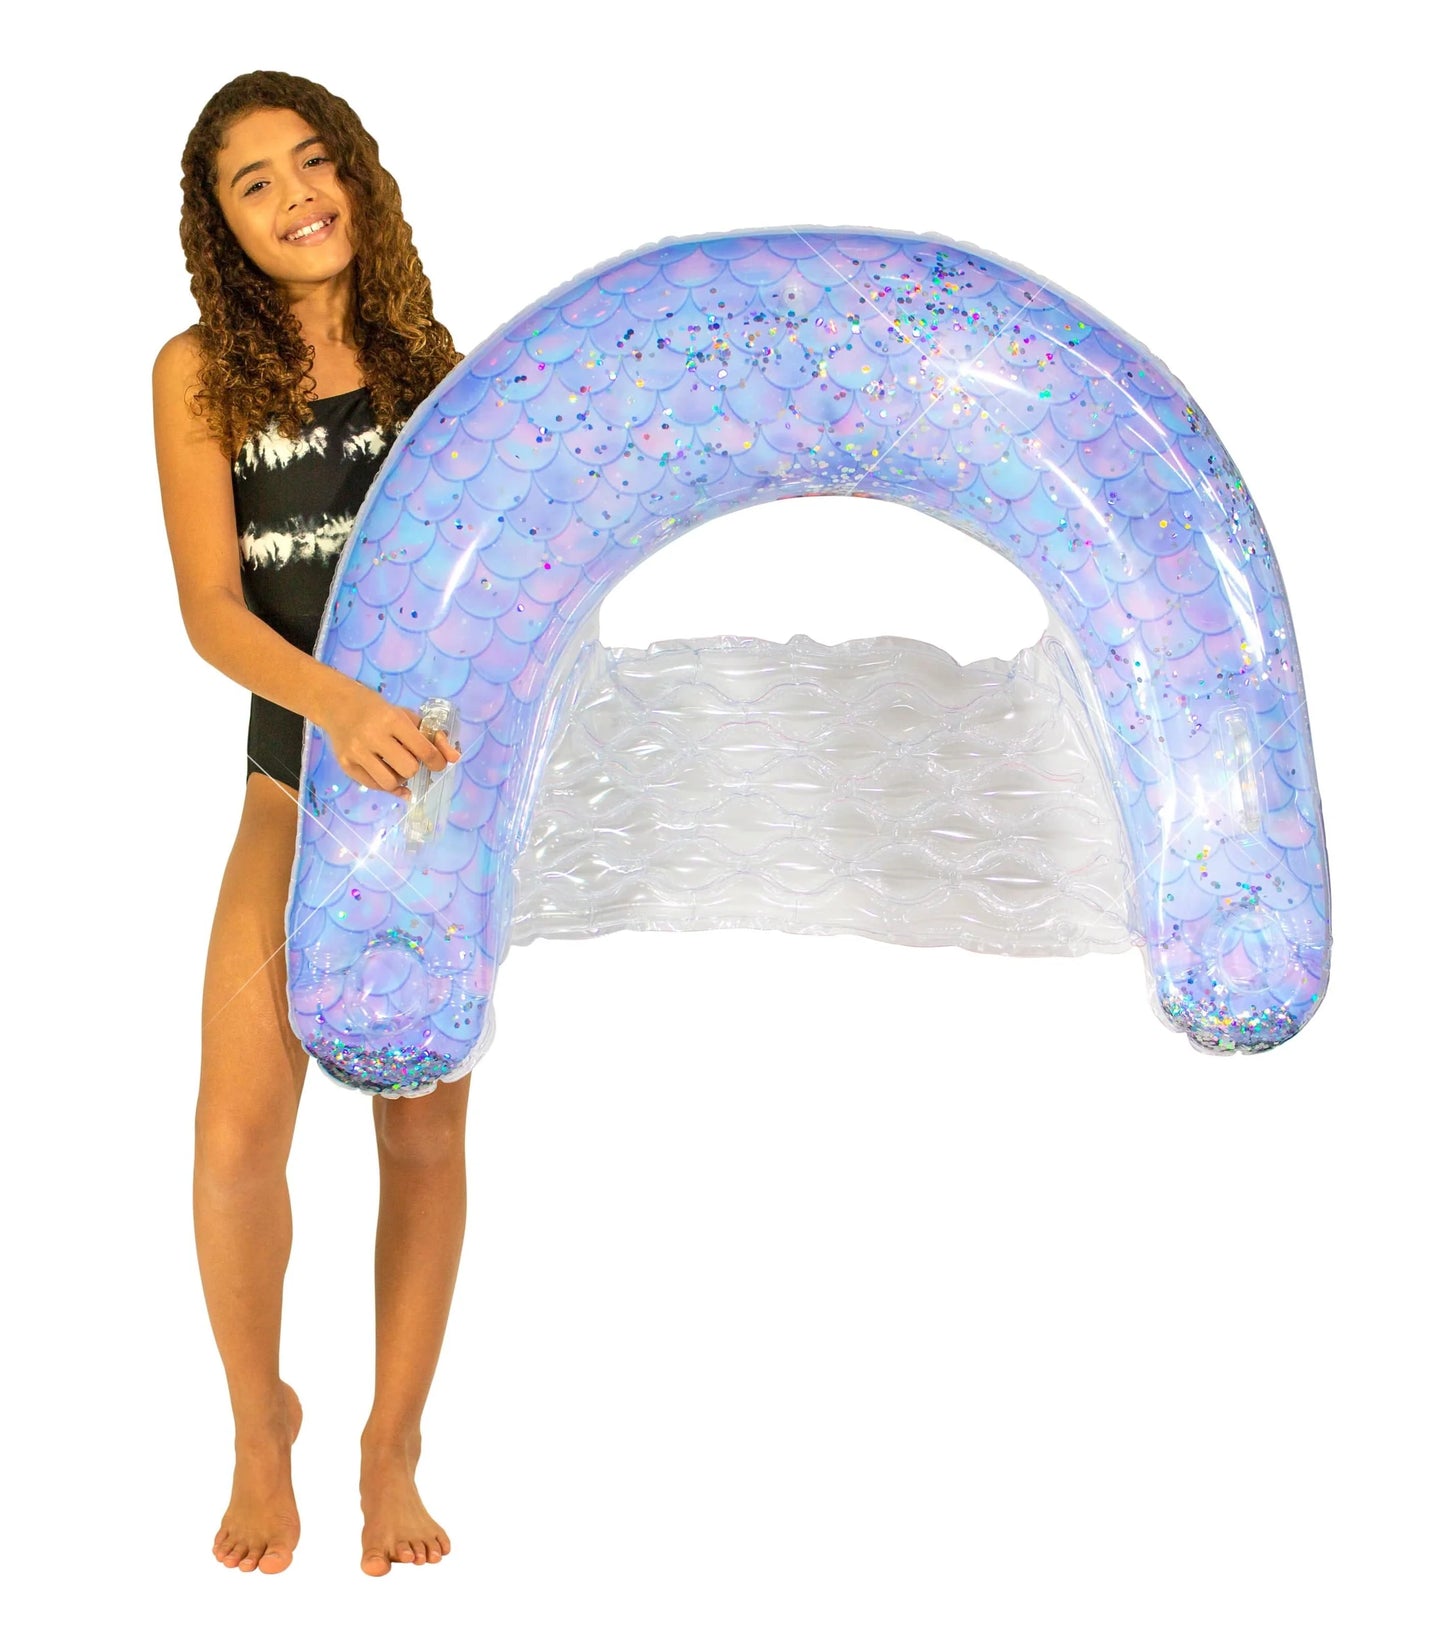 Inflatable Sun Chair - Mermaid